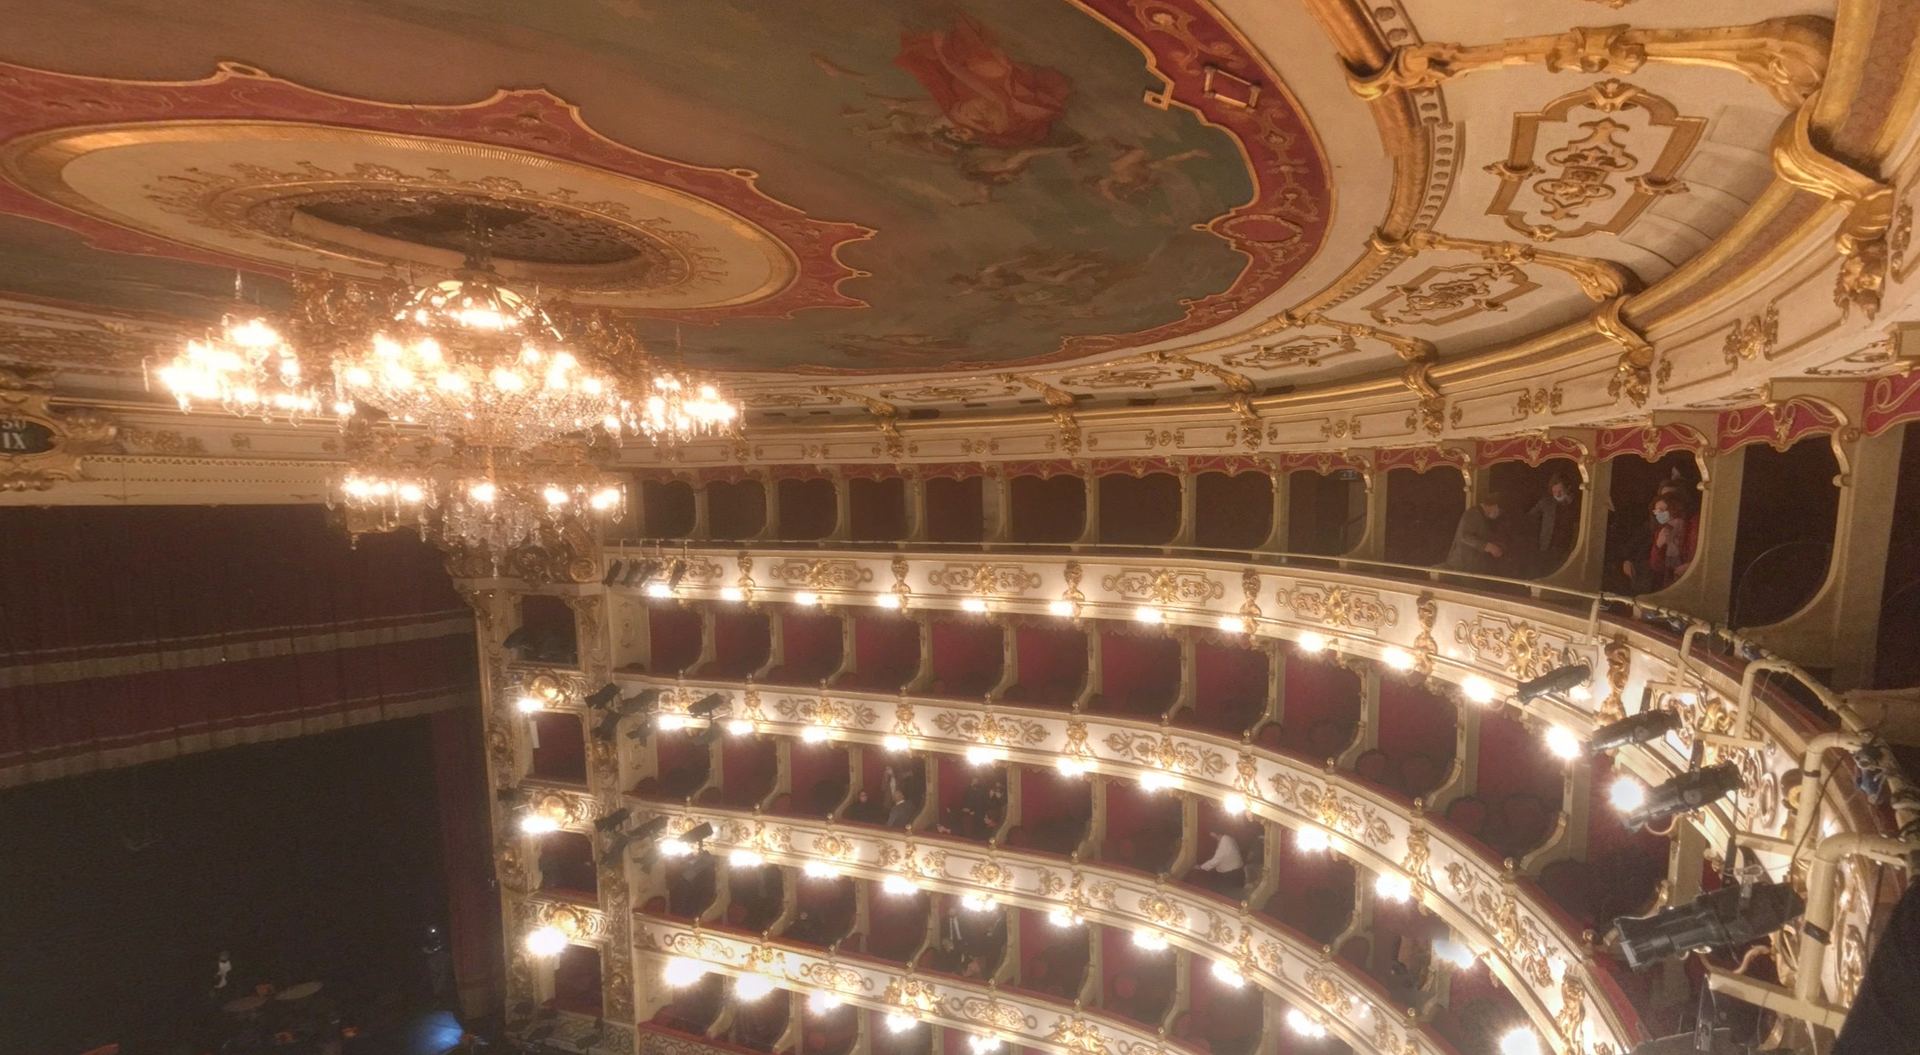 Teatro Regio di Parma by Google Earth